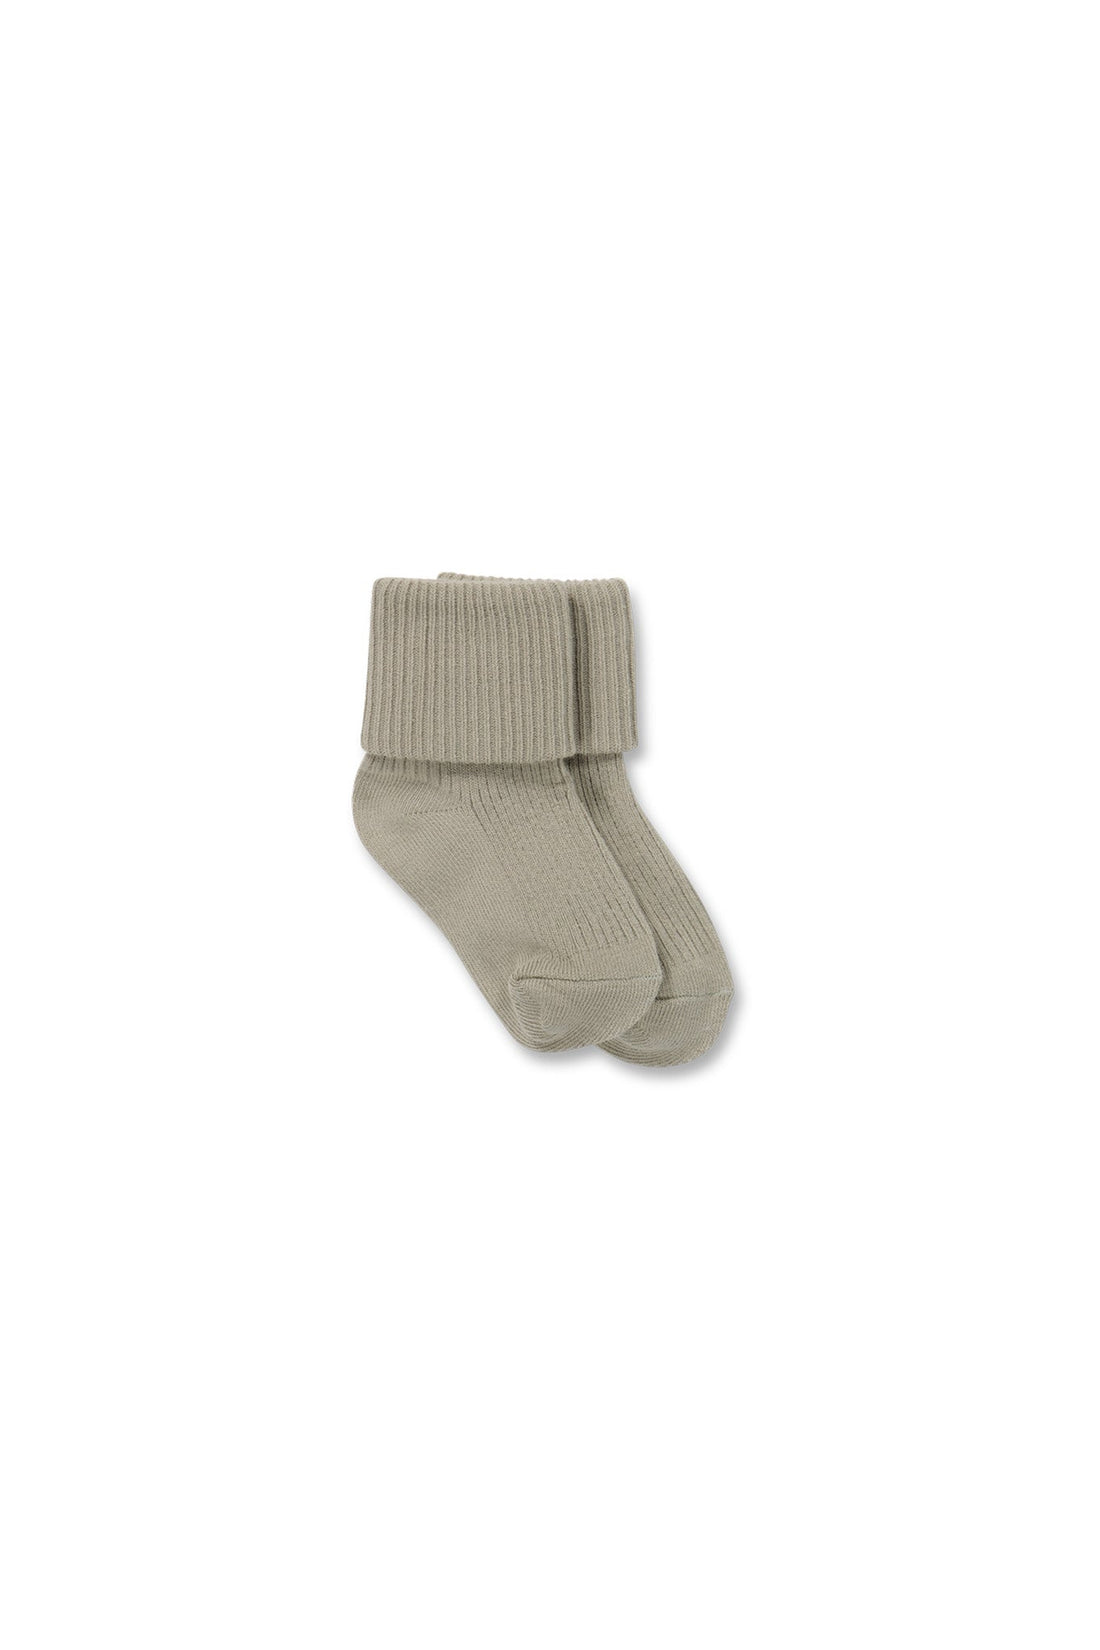 Classic Rib Sock - Shale Grey Childrens Sock from Jamie Kay USA